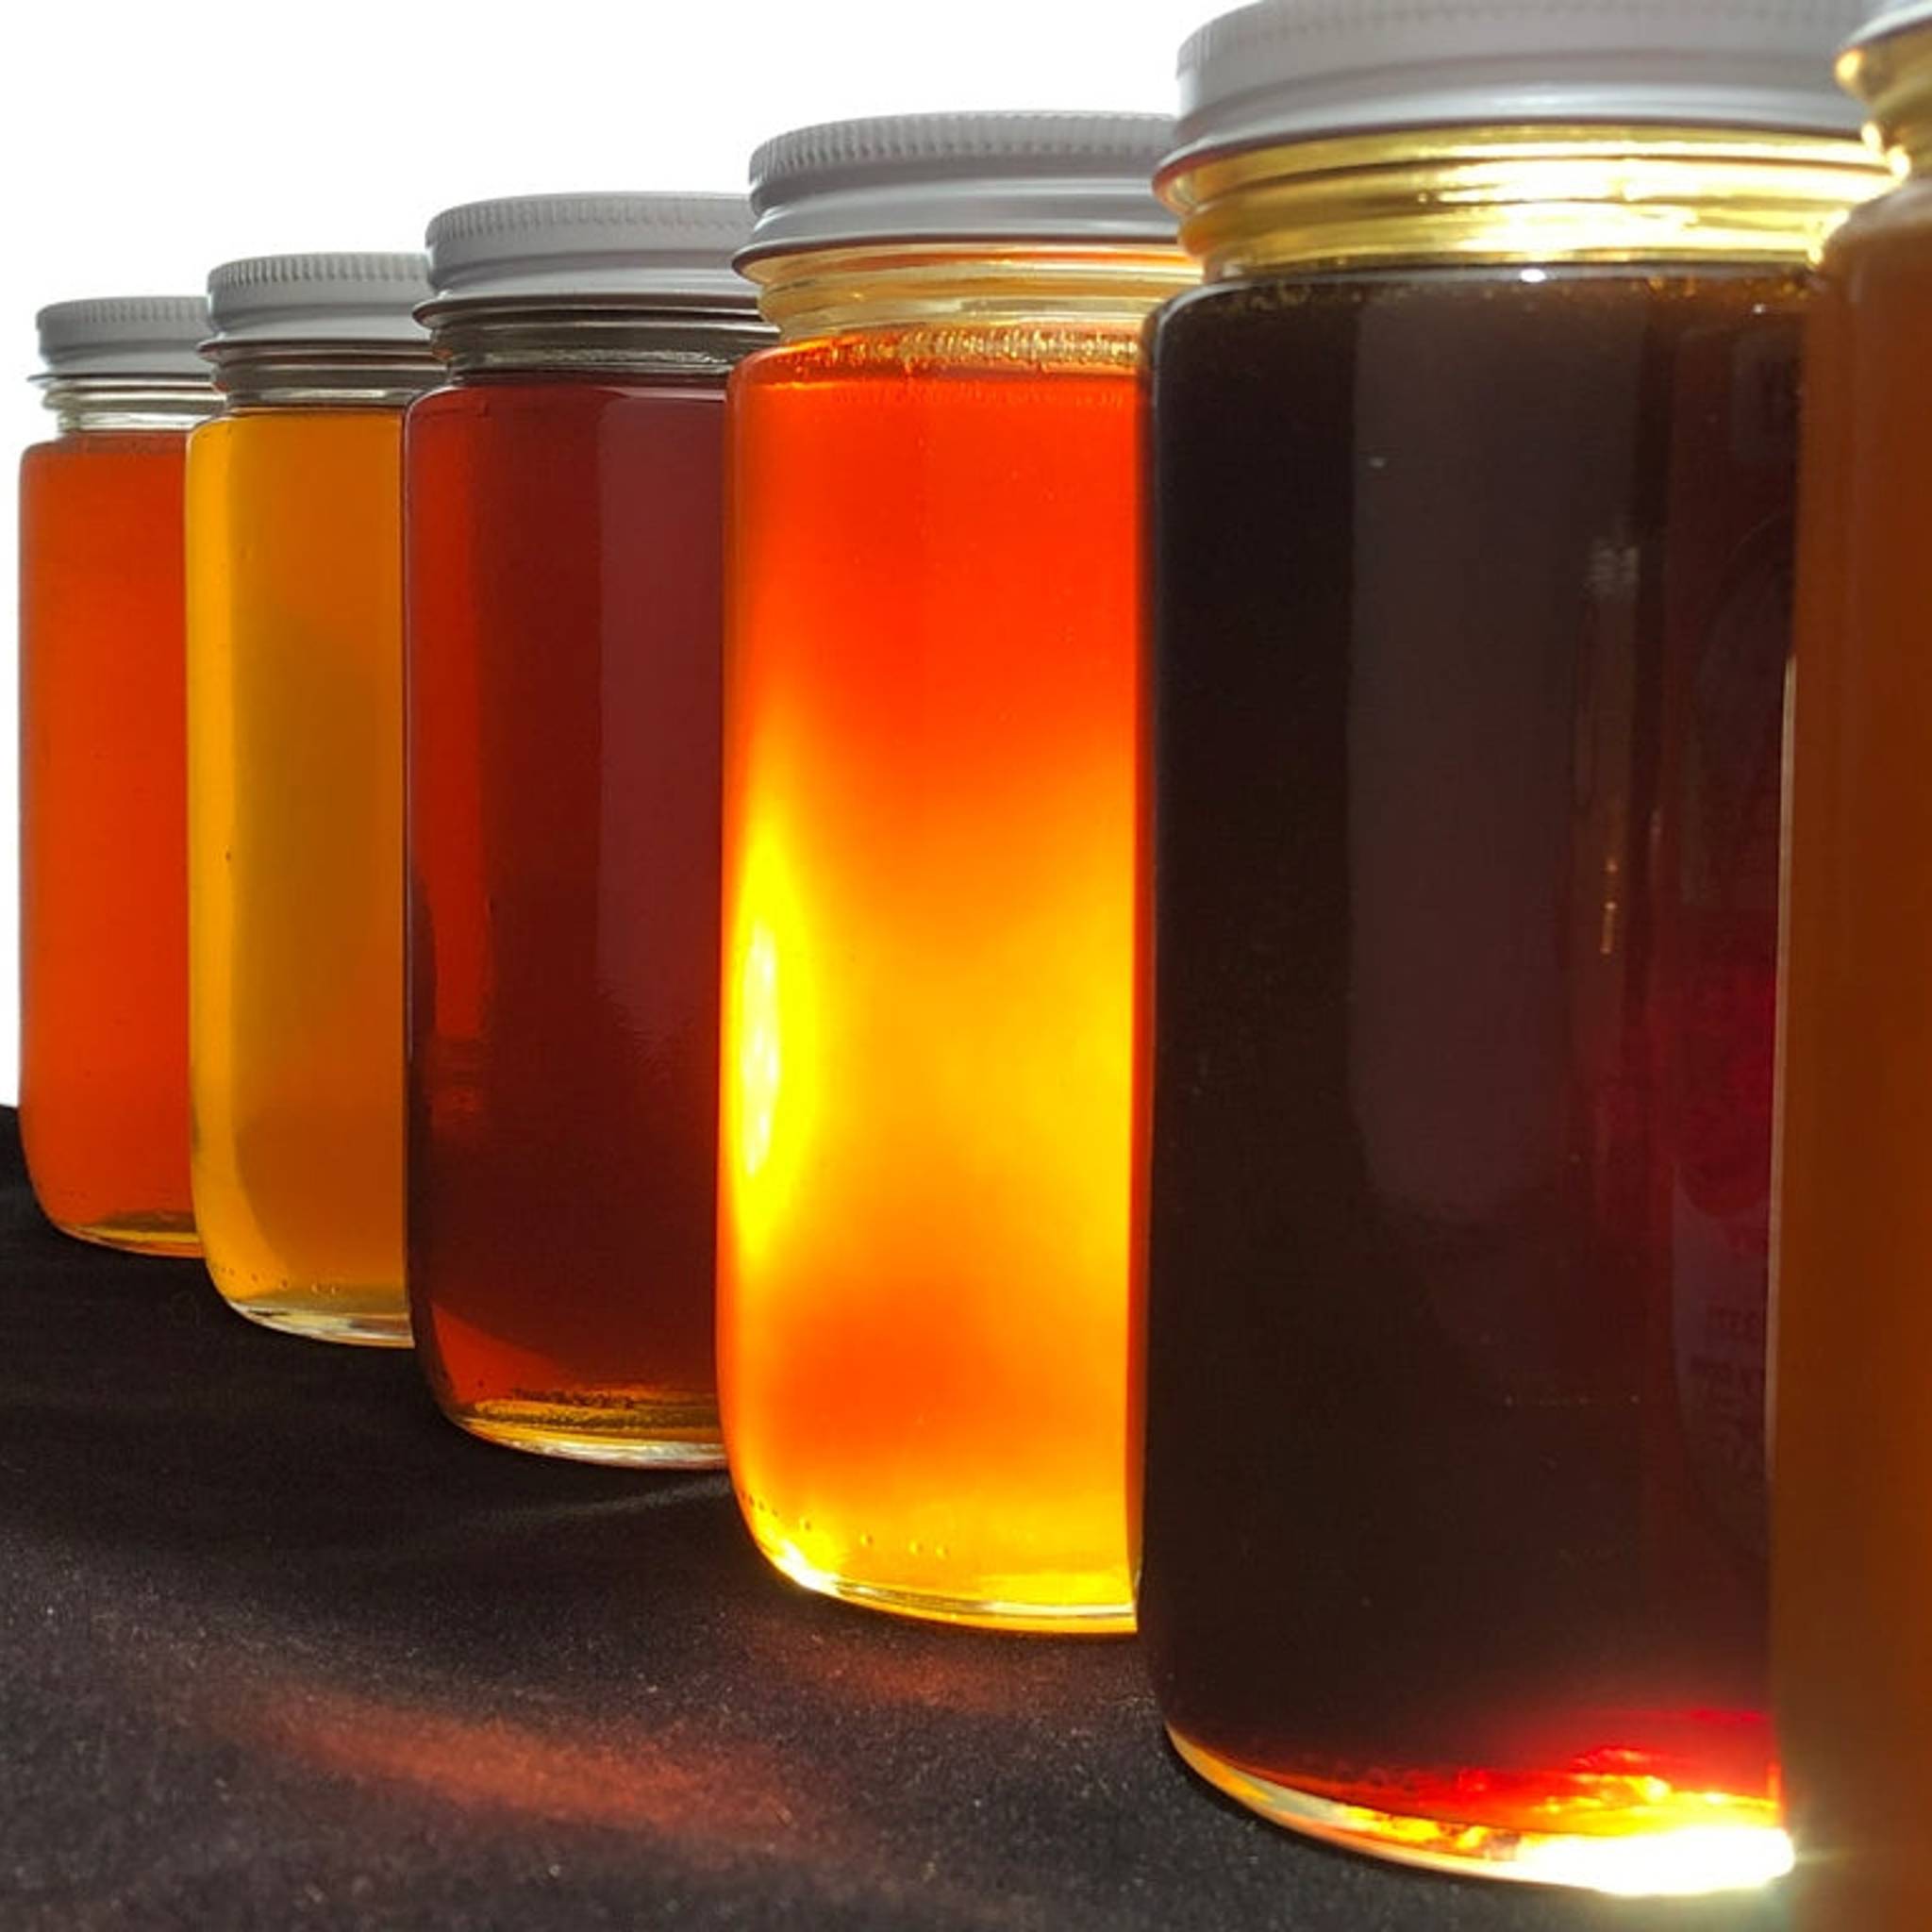 Mill Creek Apiary has a variety of honey